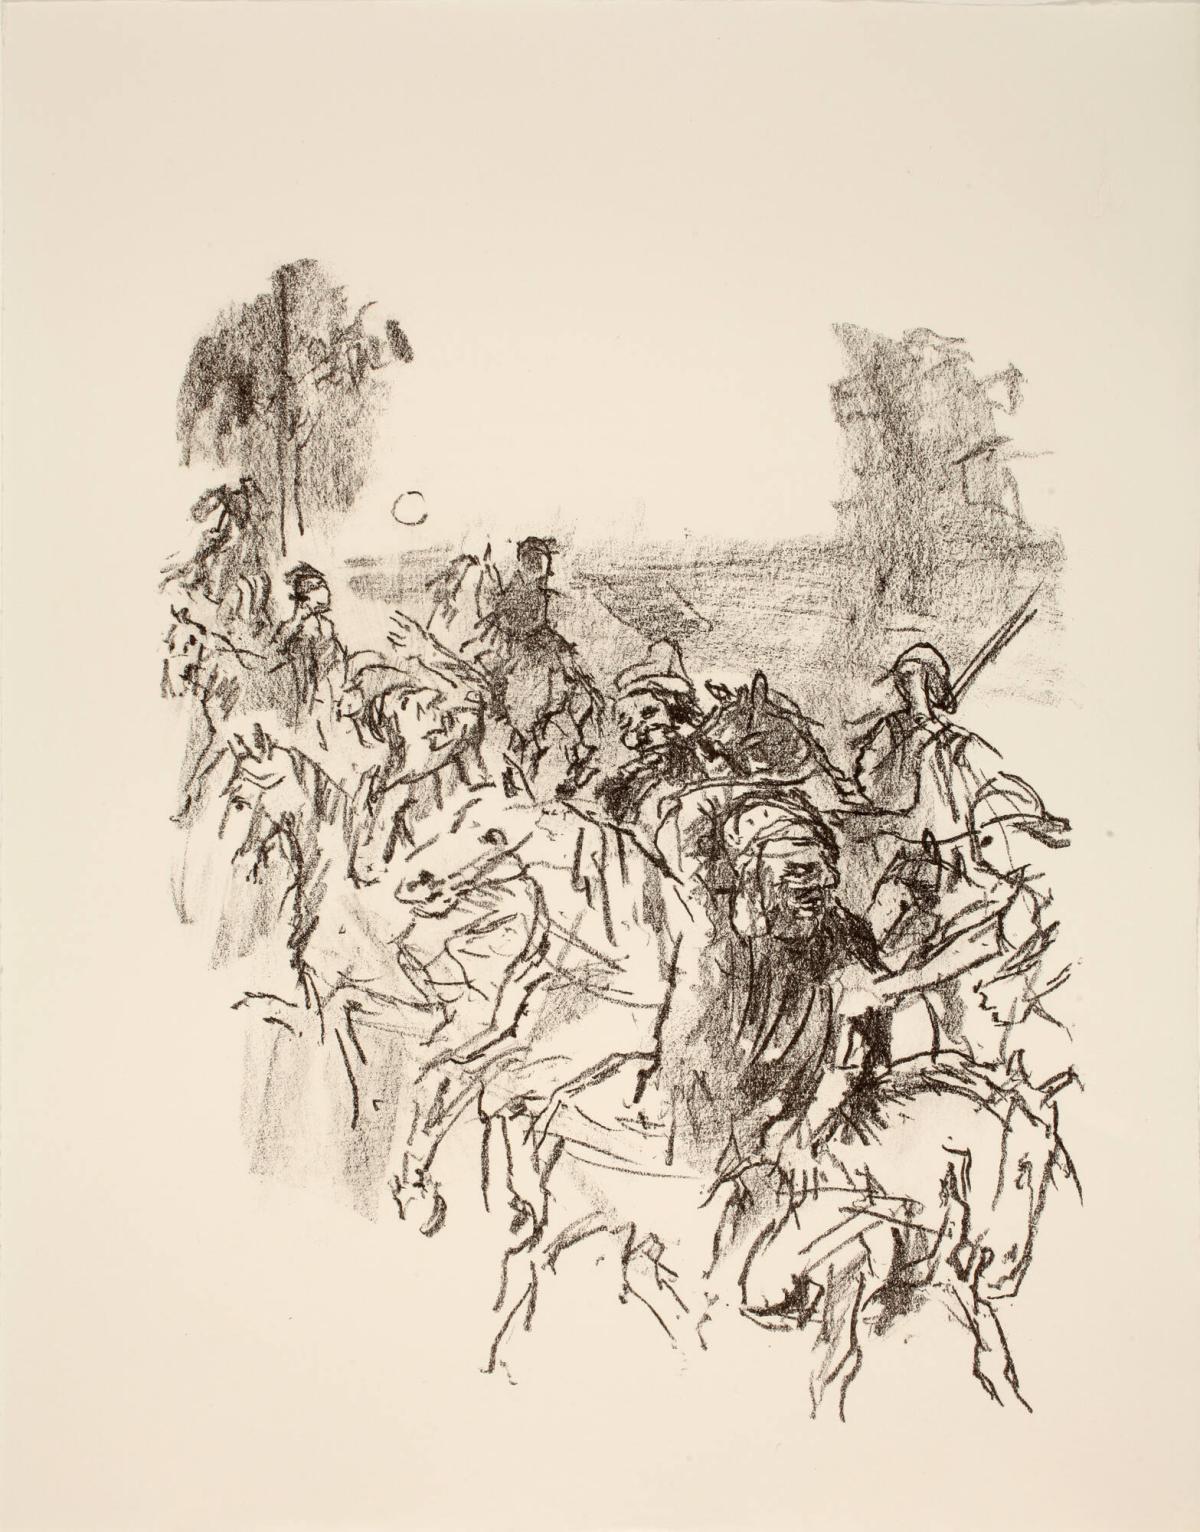 Lear and his men leaving Goneril's castle (Act I, Scene V), from the portfolio King Lear